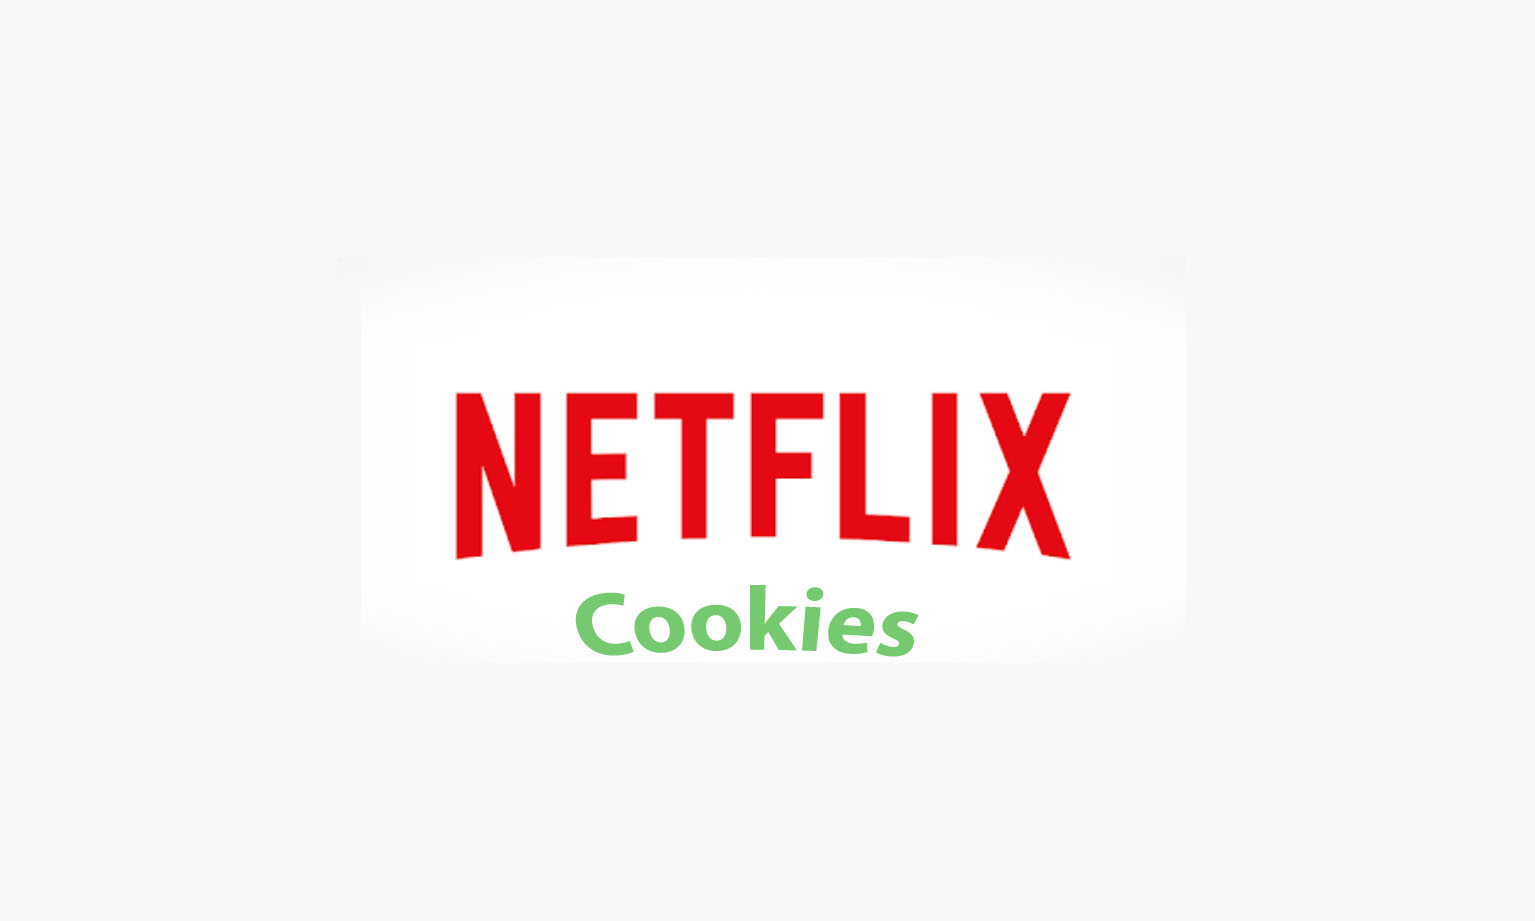 Netflix Cookies July 2020 Watch Netflix For Free 100 Working